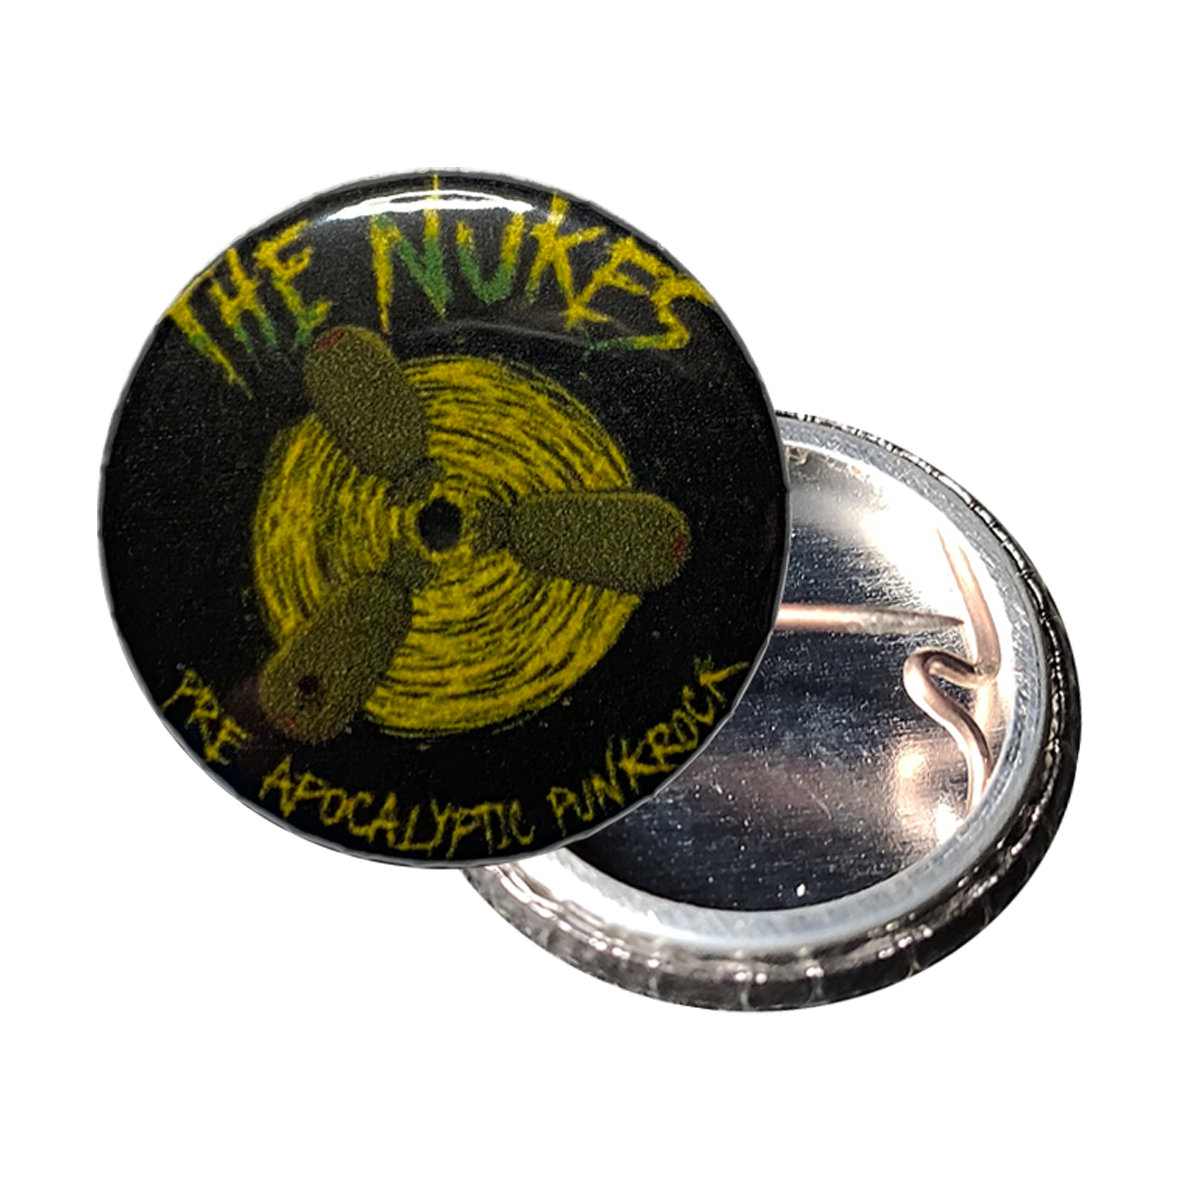 The Nukes